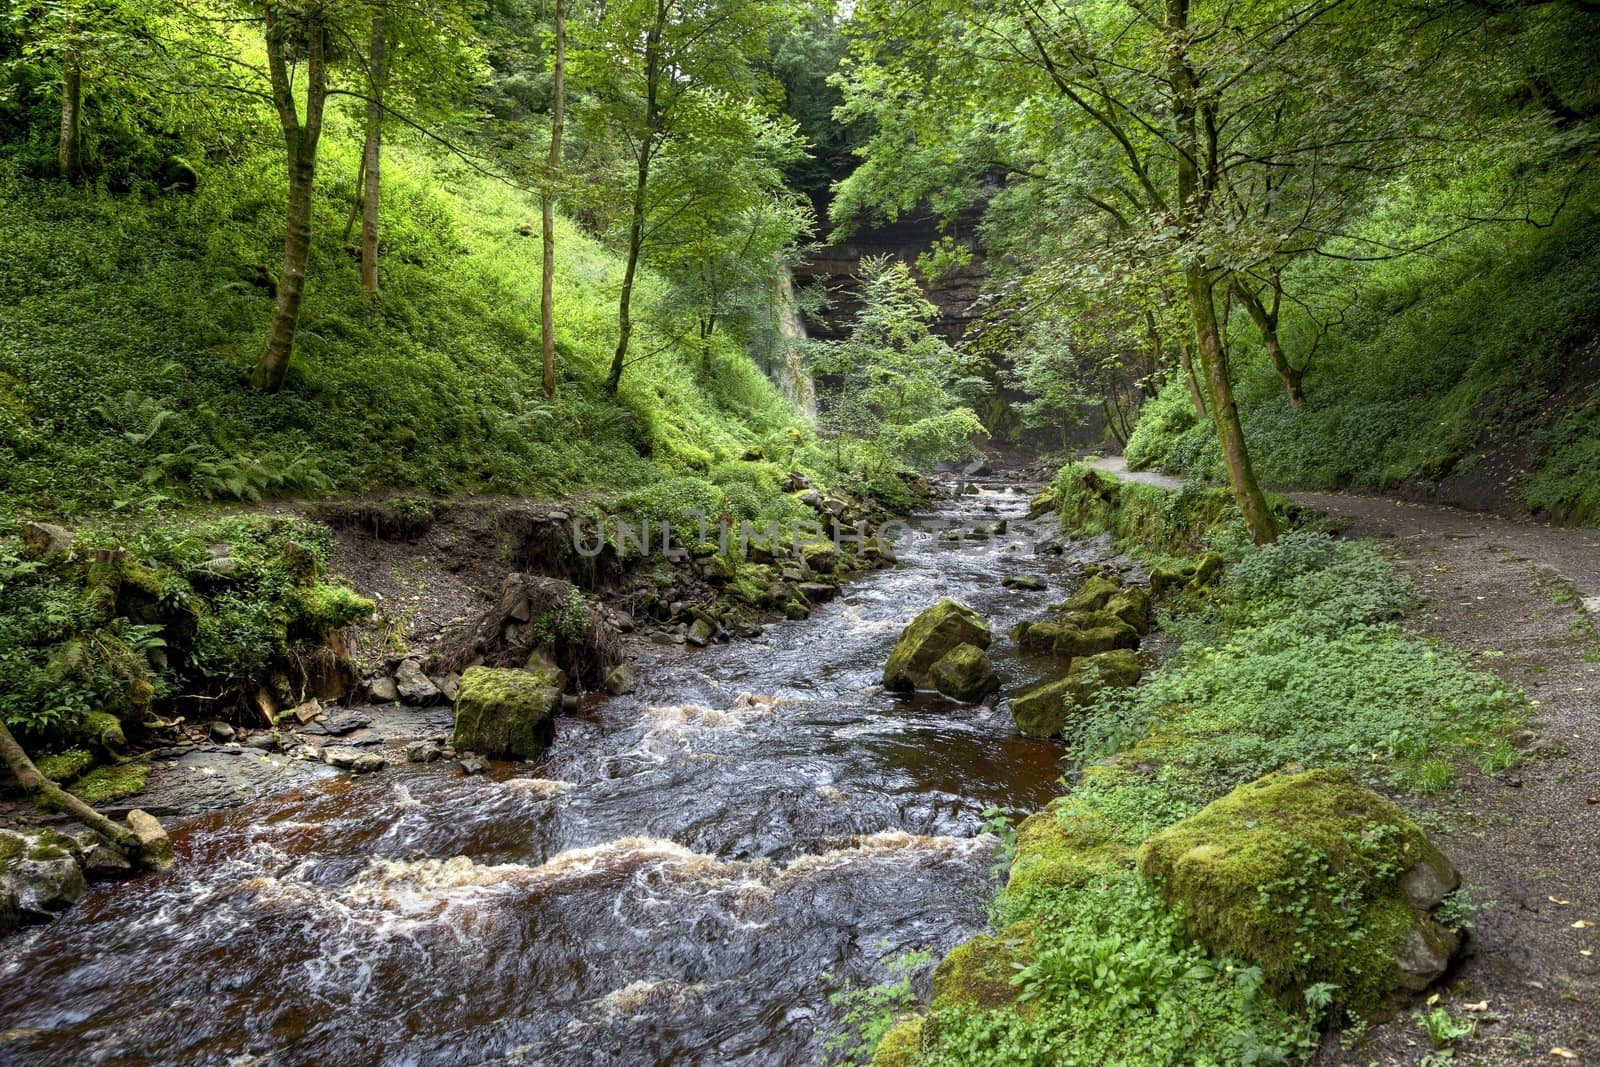 River through woodland, Yorkshire Dales National Park, England.